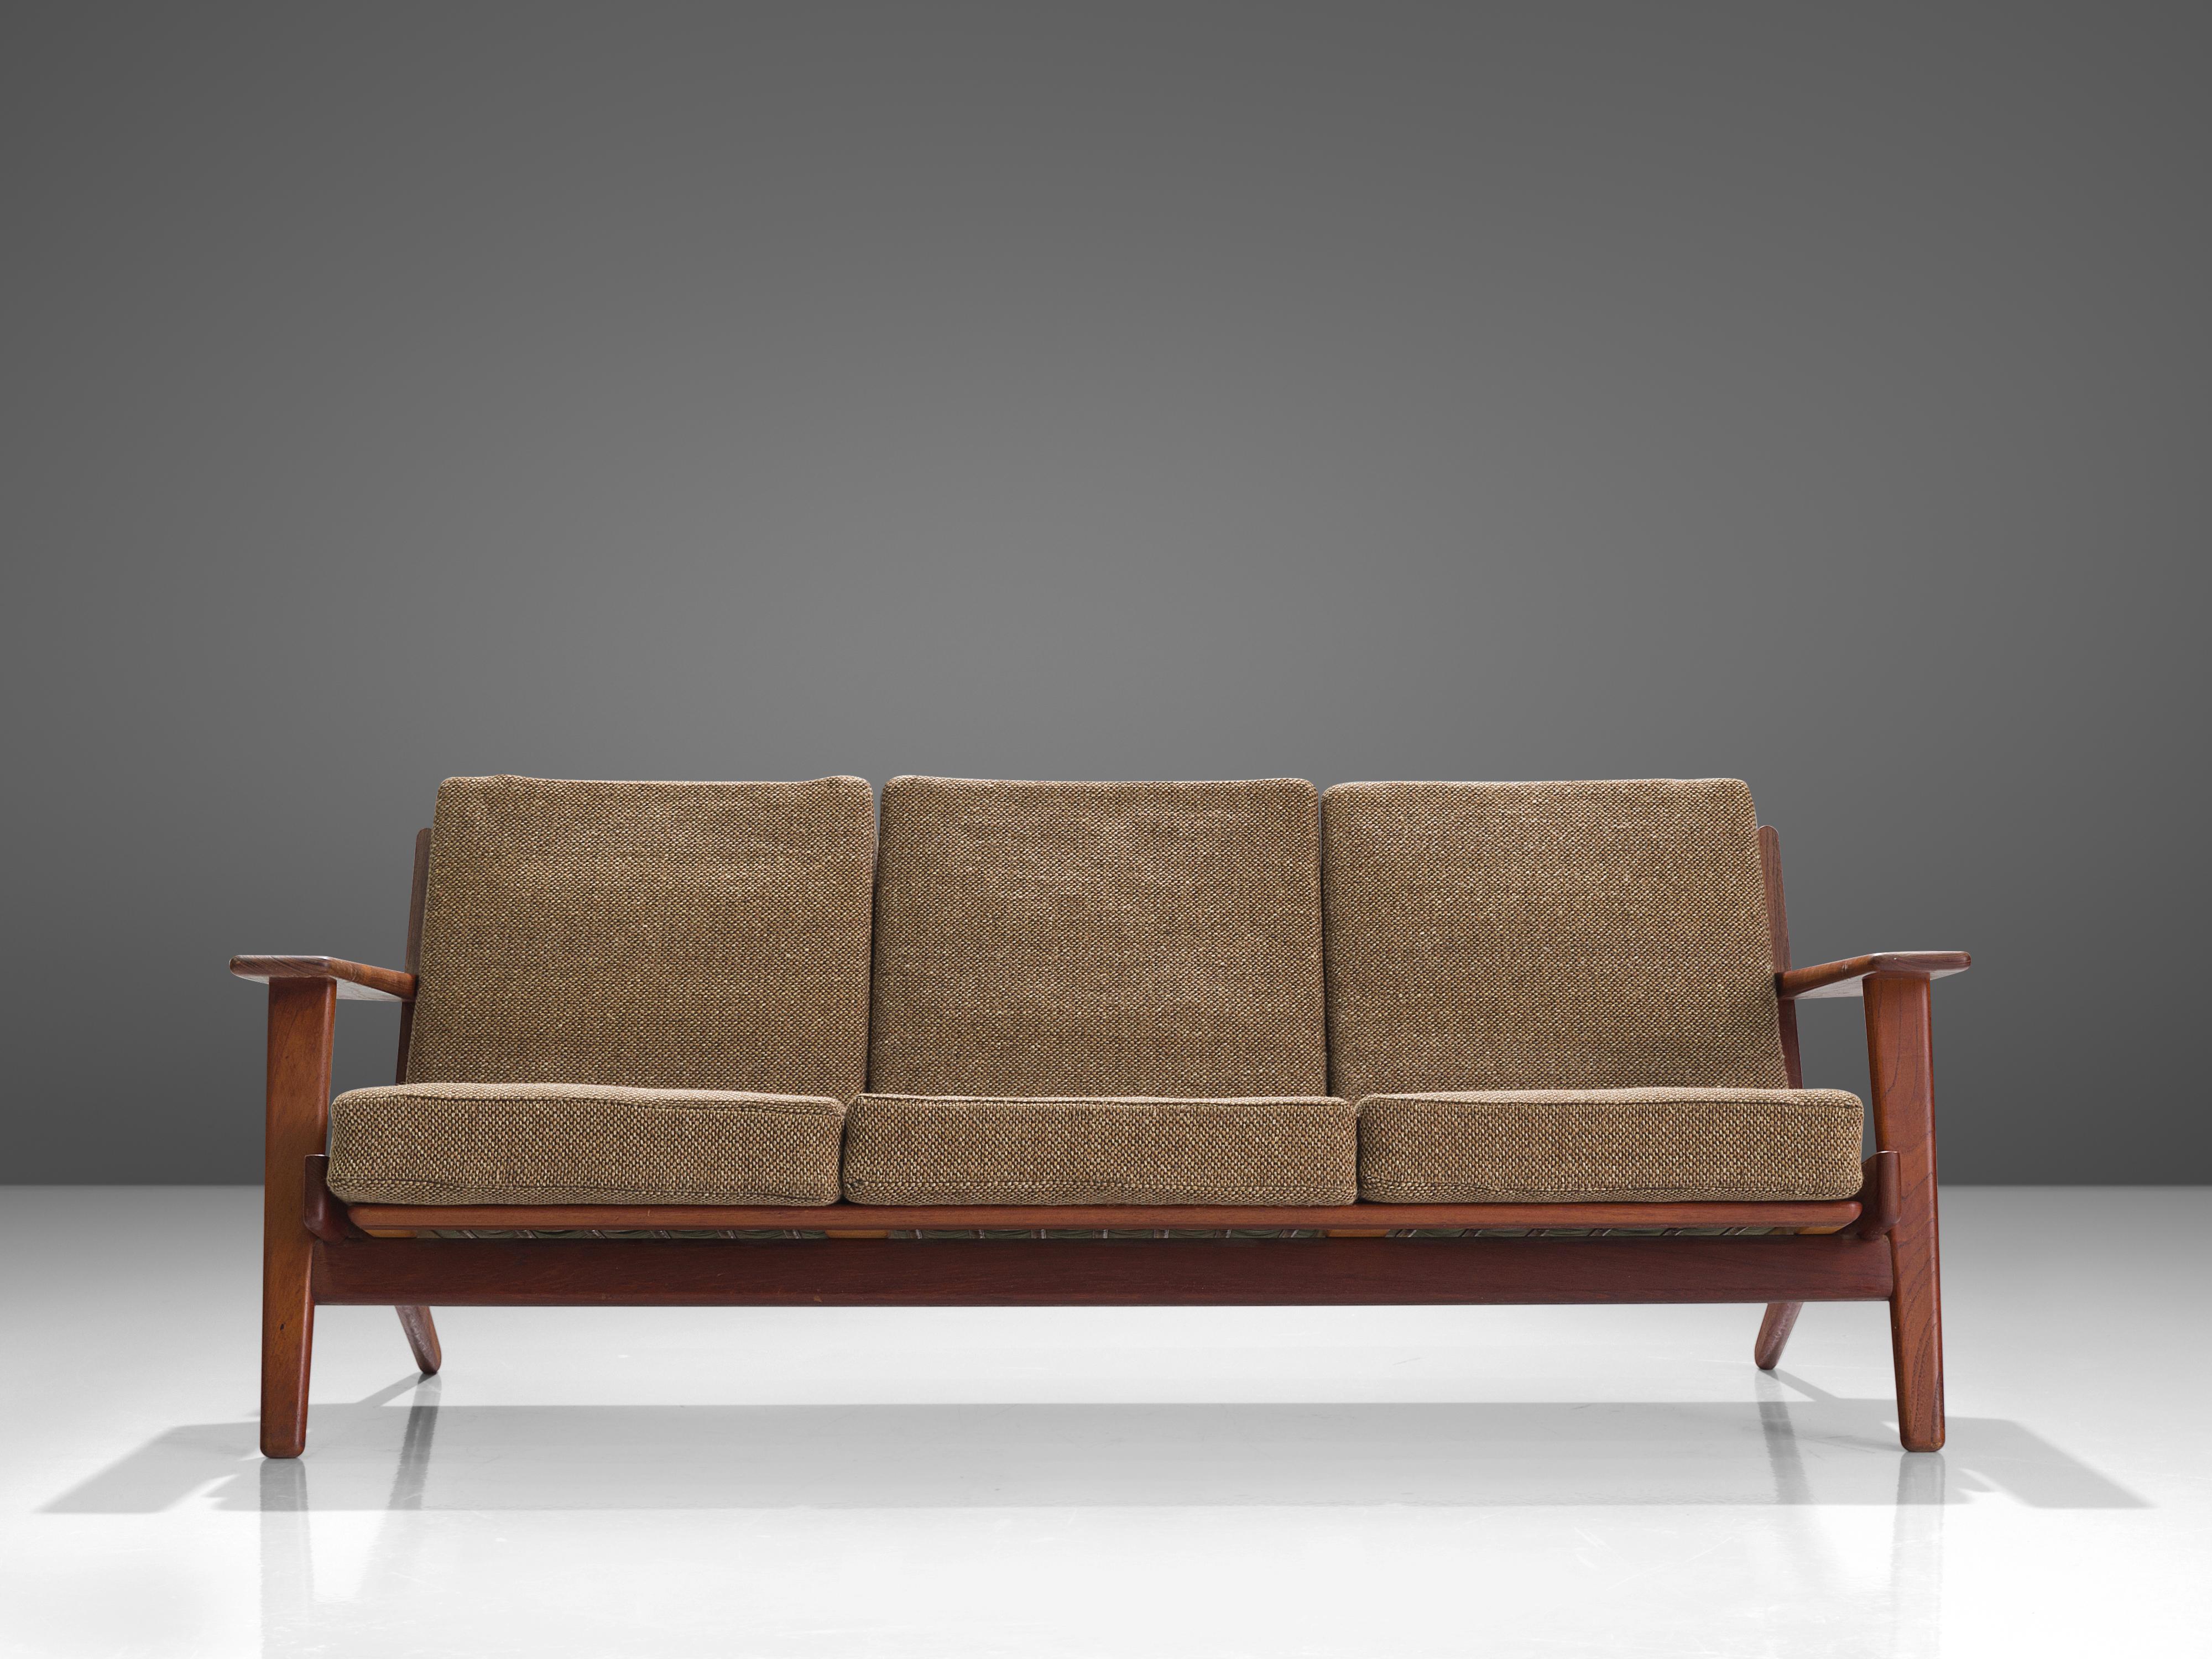 Scandinavian Modern Hans J. Wegner for Getama Sofa 'Plank' in Teak and Brown Upholstery 